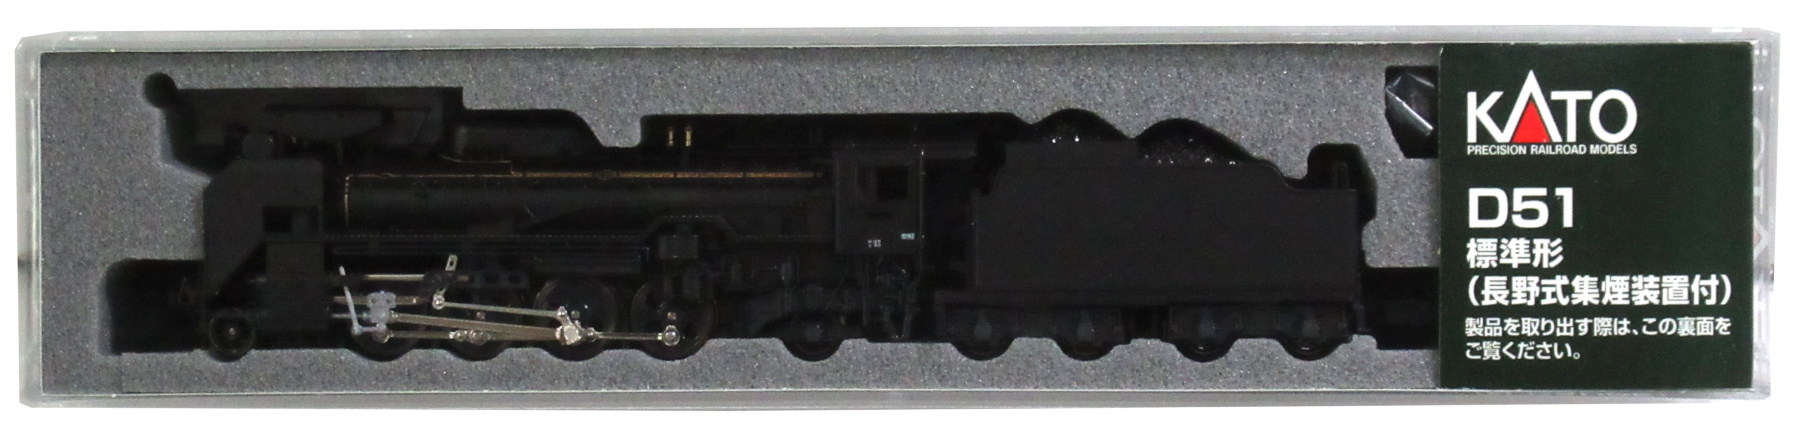 2016-6 D51標準形(長野式集煙装置付)